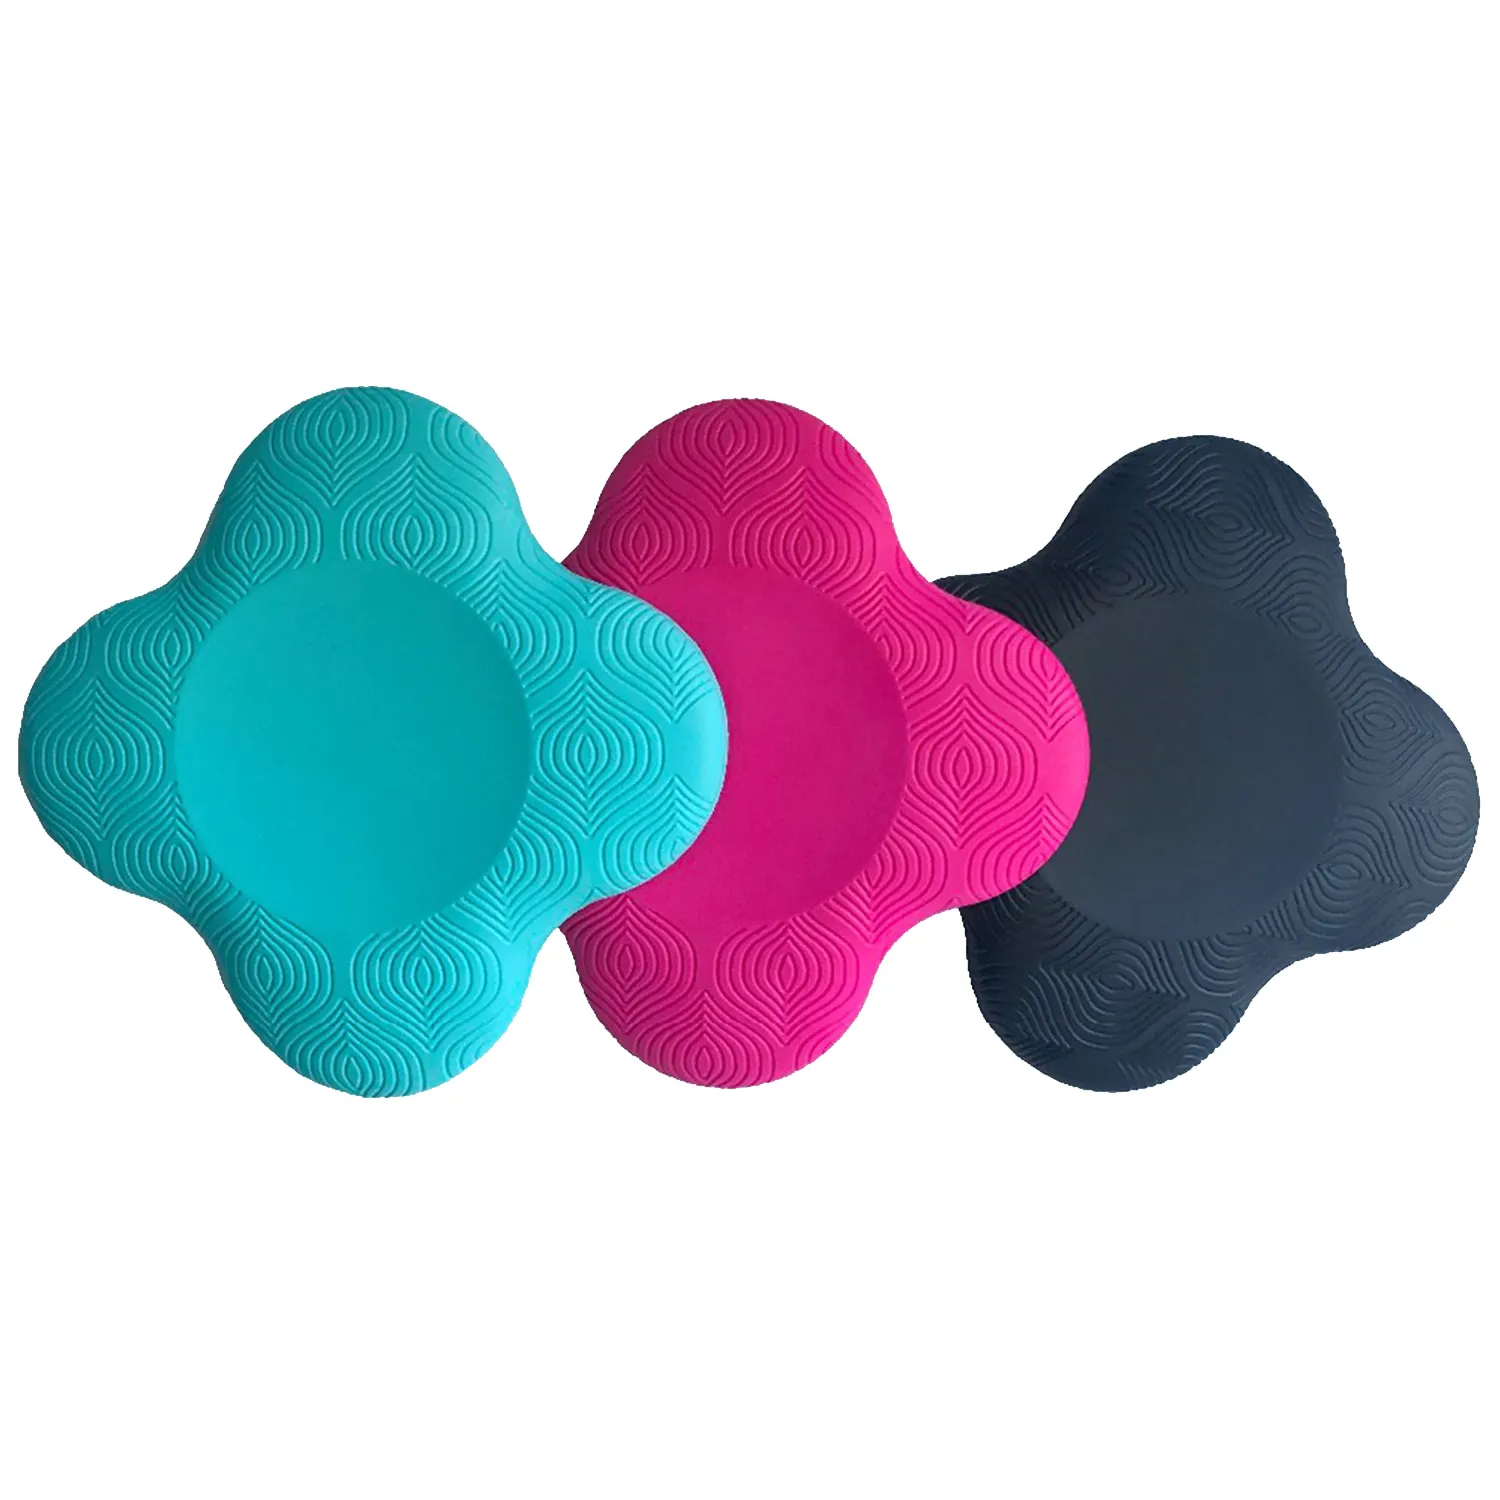 Fitness Yoga Eco-Friendly Thick PU EVA Knee Pad Cushion For Your Knees Elbow and Head Soft Foam Pilates Kneeling pad Balance Pad